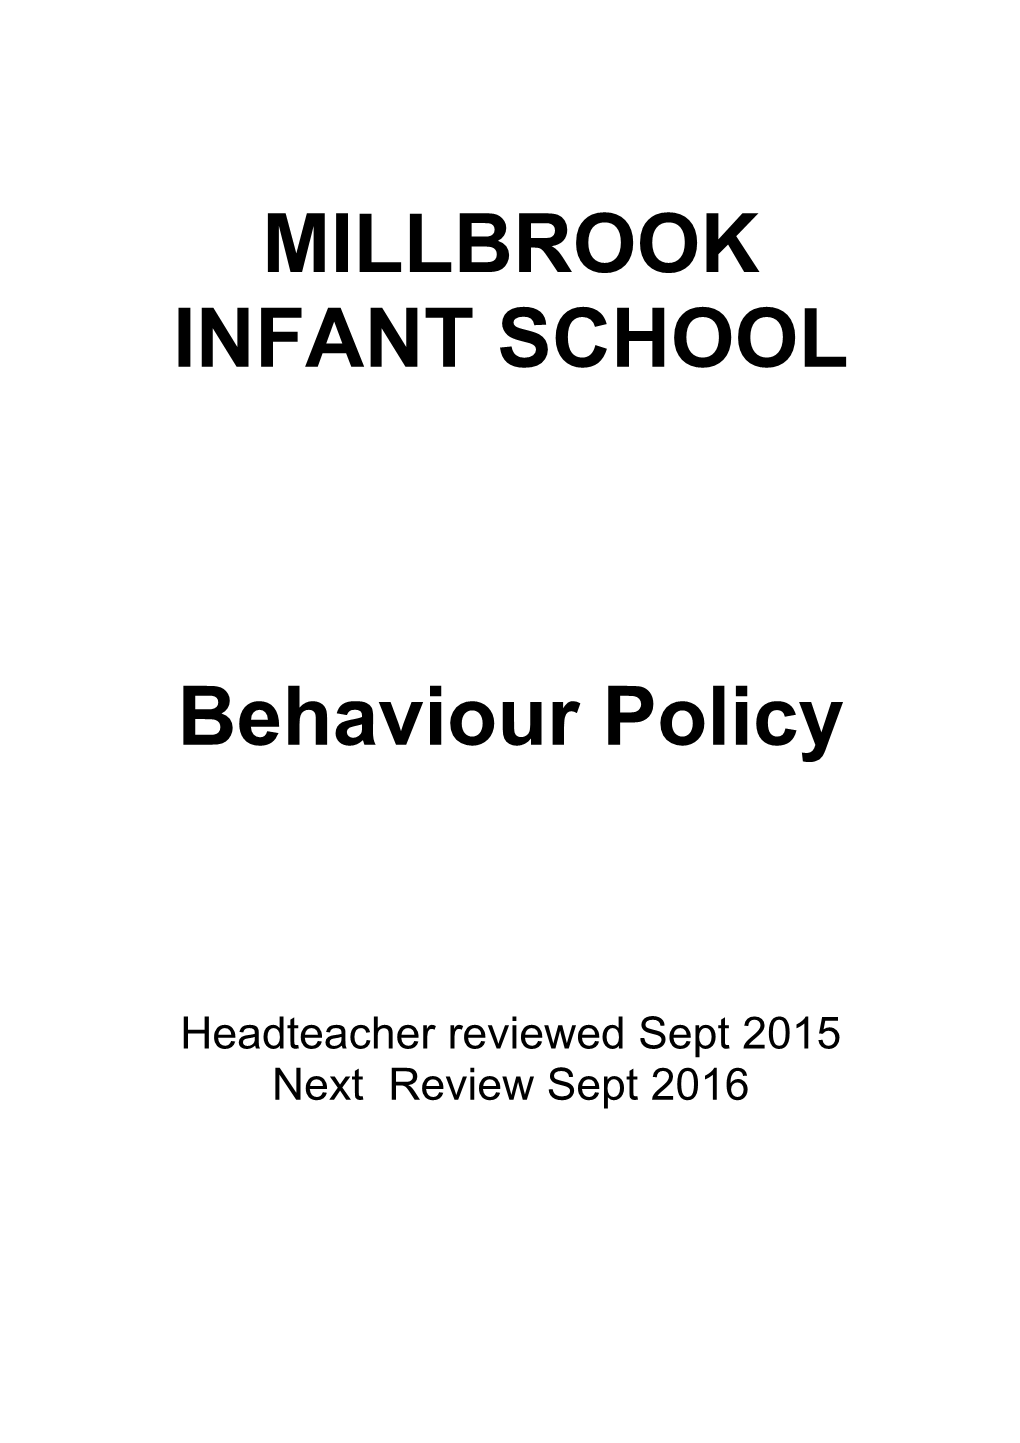 Behavior Policy (Draft)